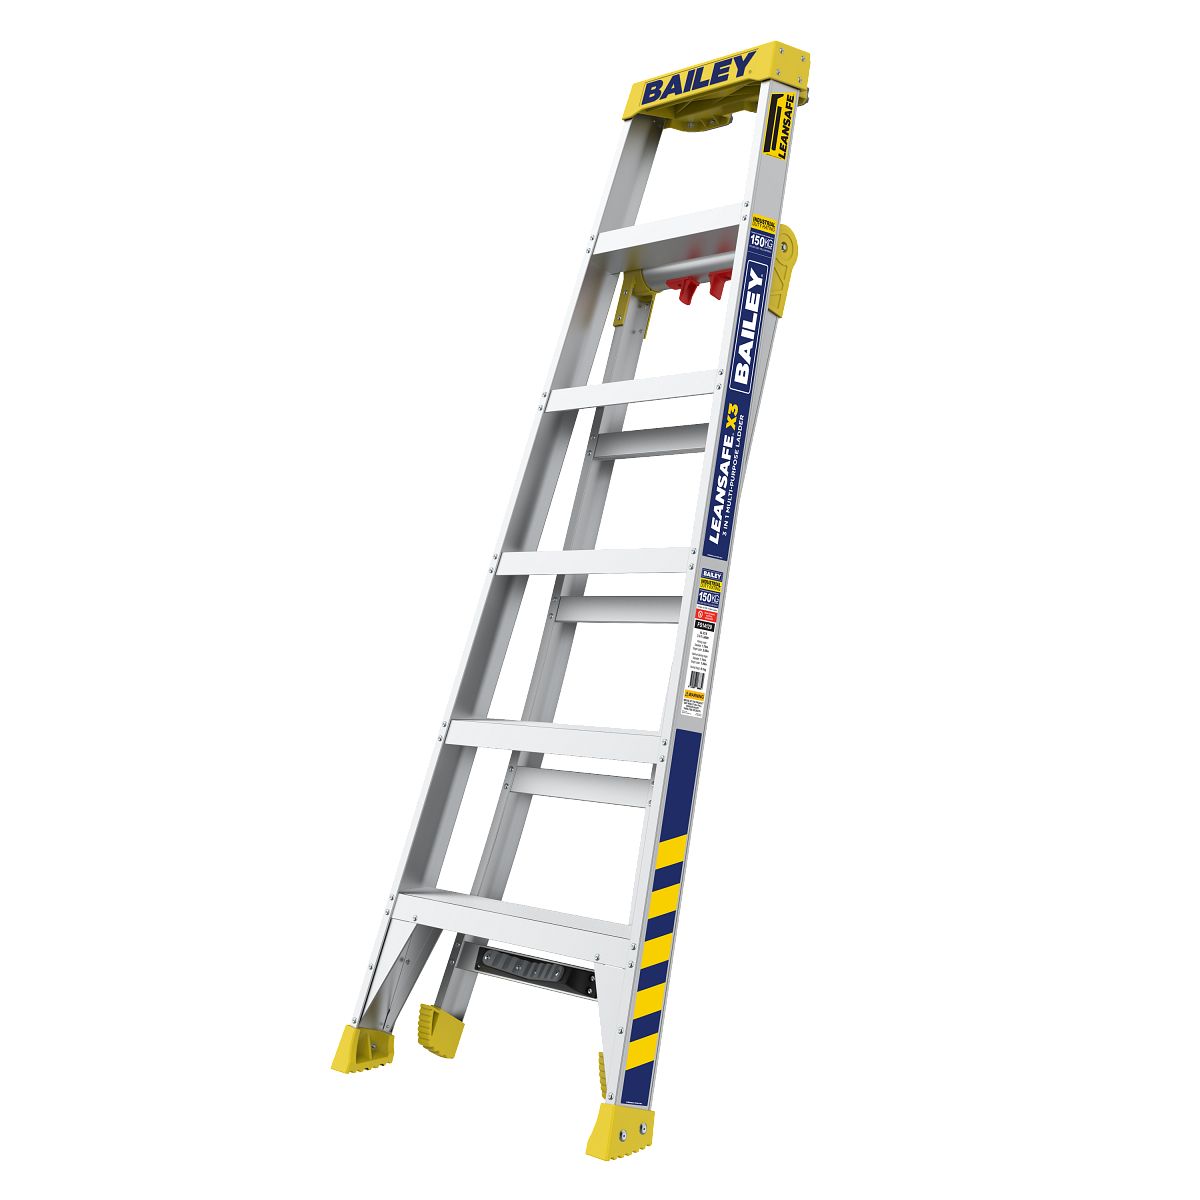 3 in 1  Lean Safe Ladder 150kg by Bailey